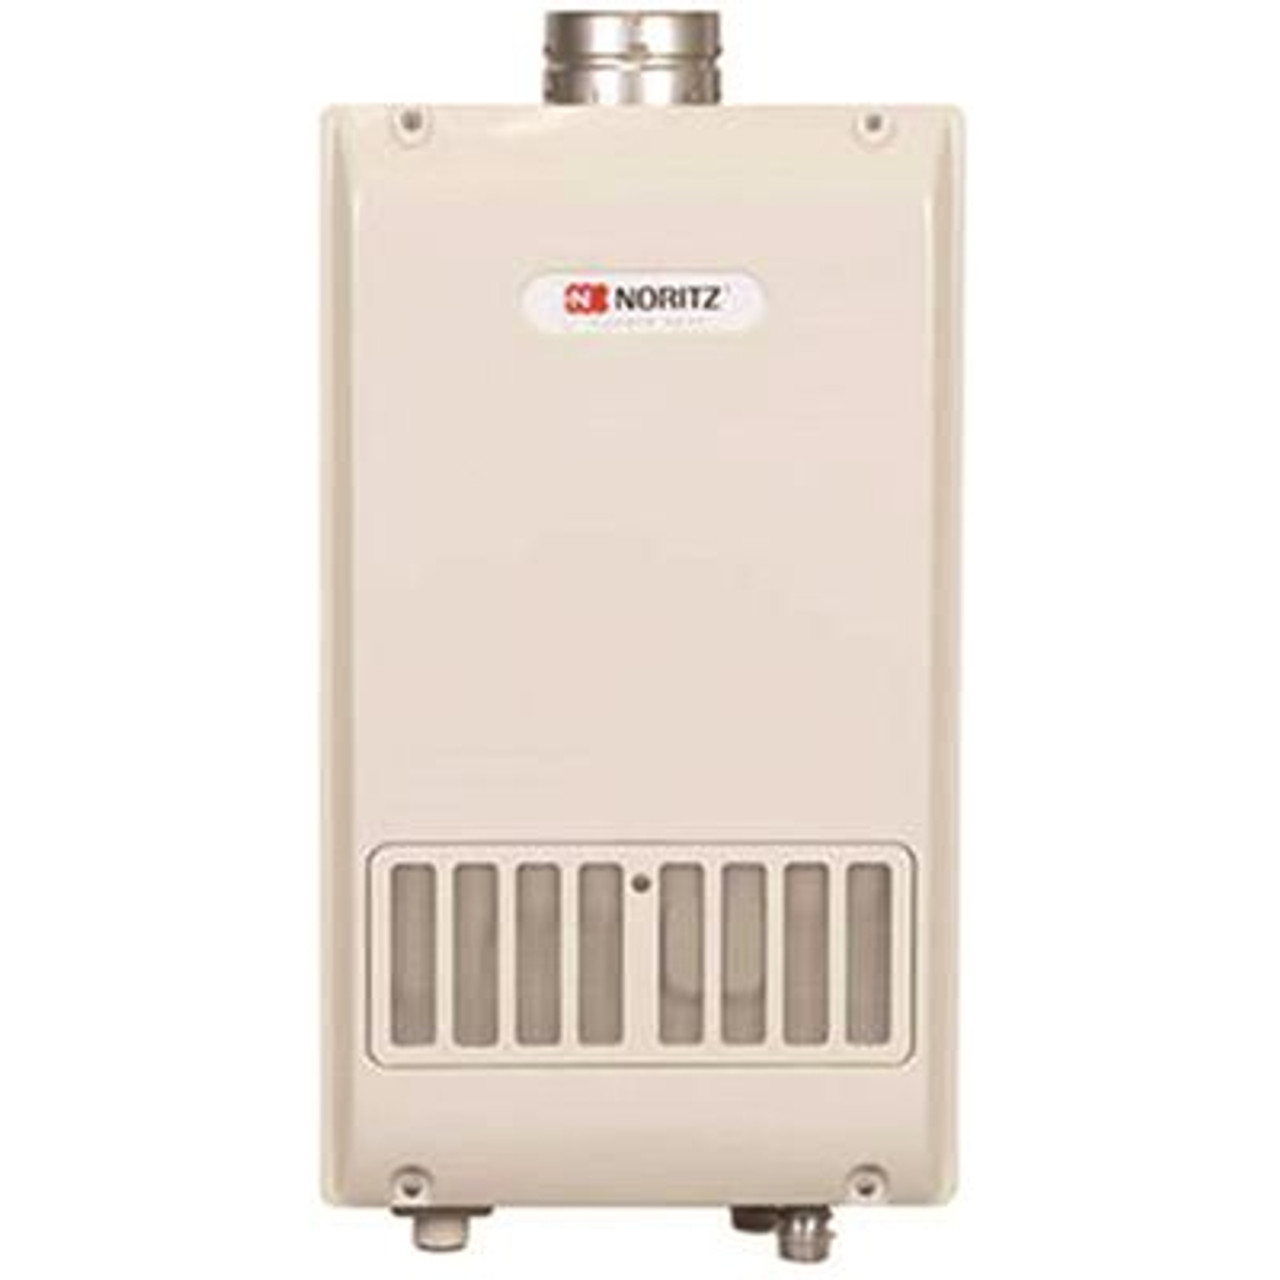 NORITZ 199,900 BTU 9.8 GPM Residential Indoor Single Vent Liquid Propane Gas Tankless Water Heater